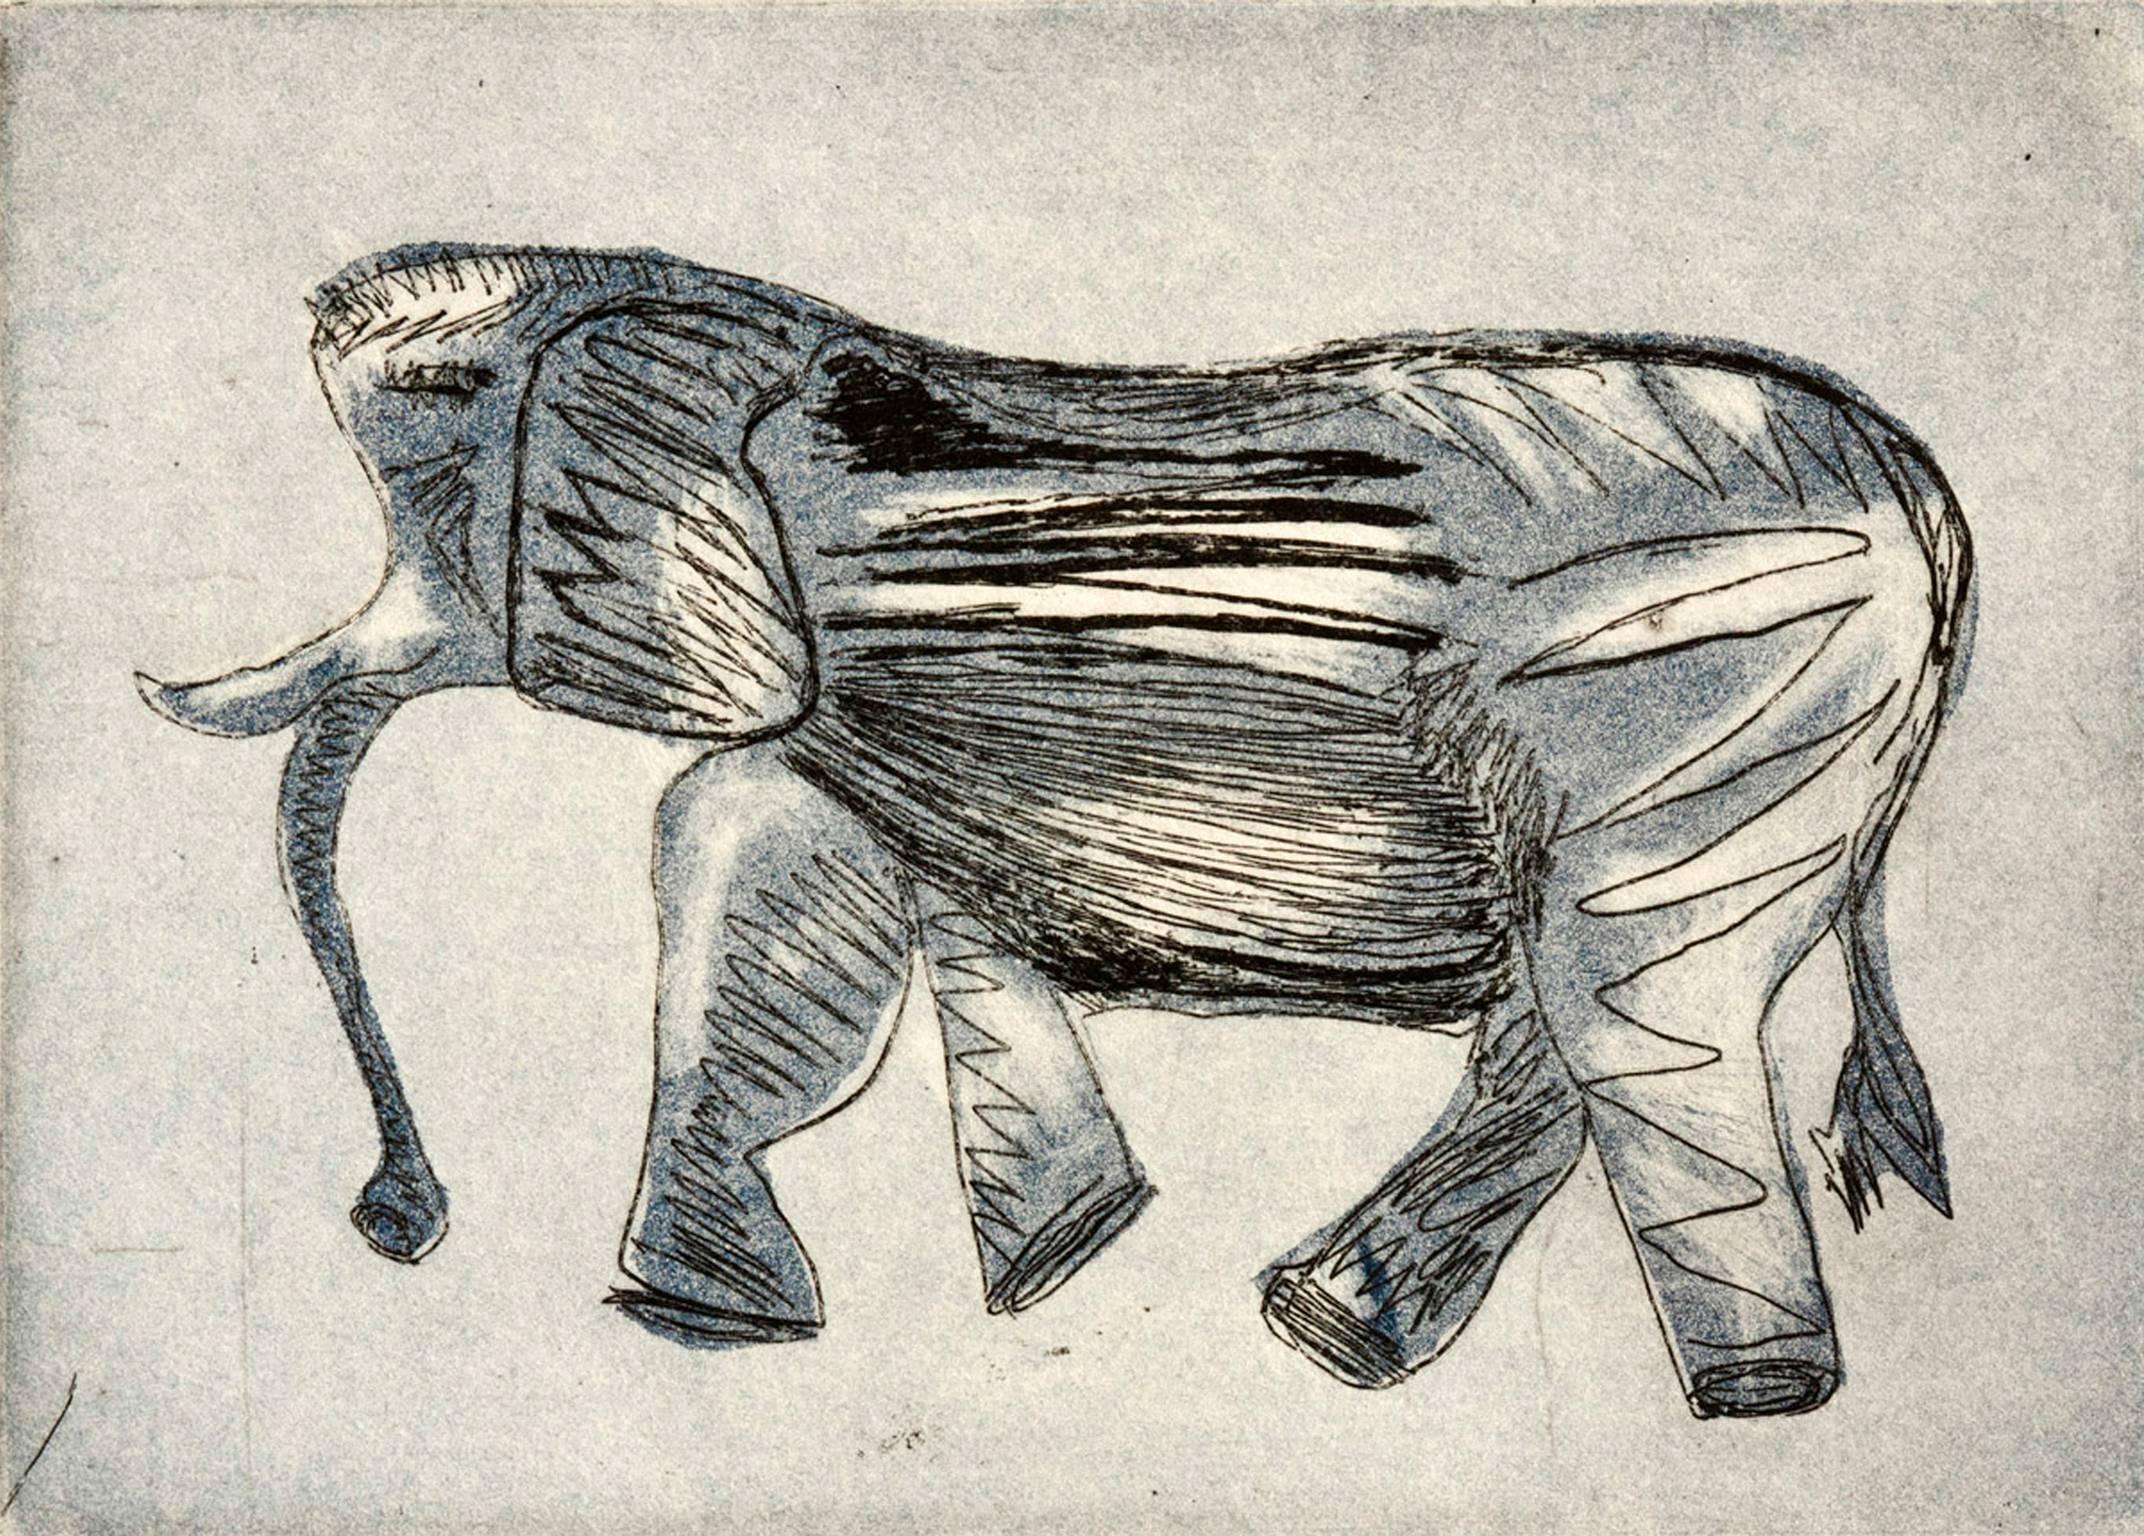 David Marell Animal Print - "African Elephant", wildlife animal etching, aquatint print, gray and black.